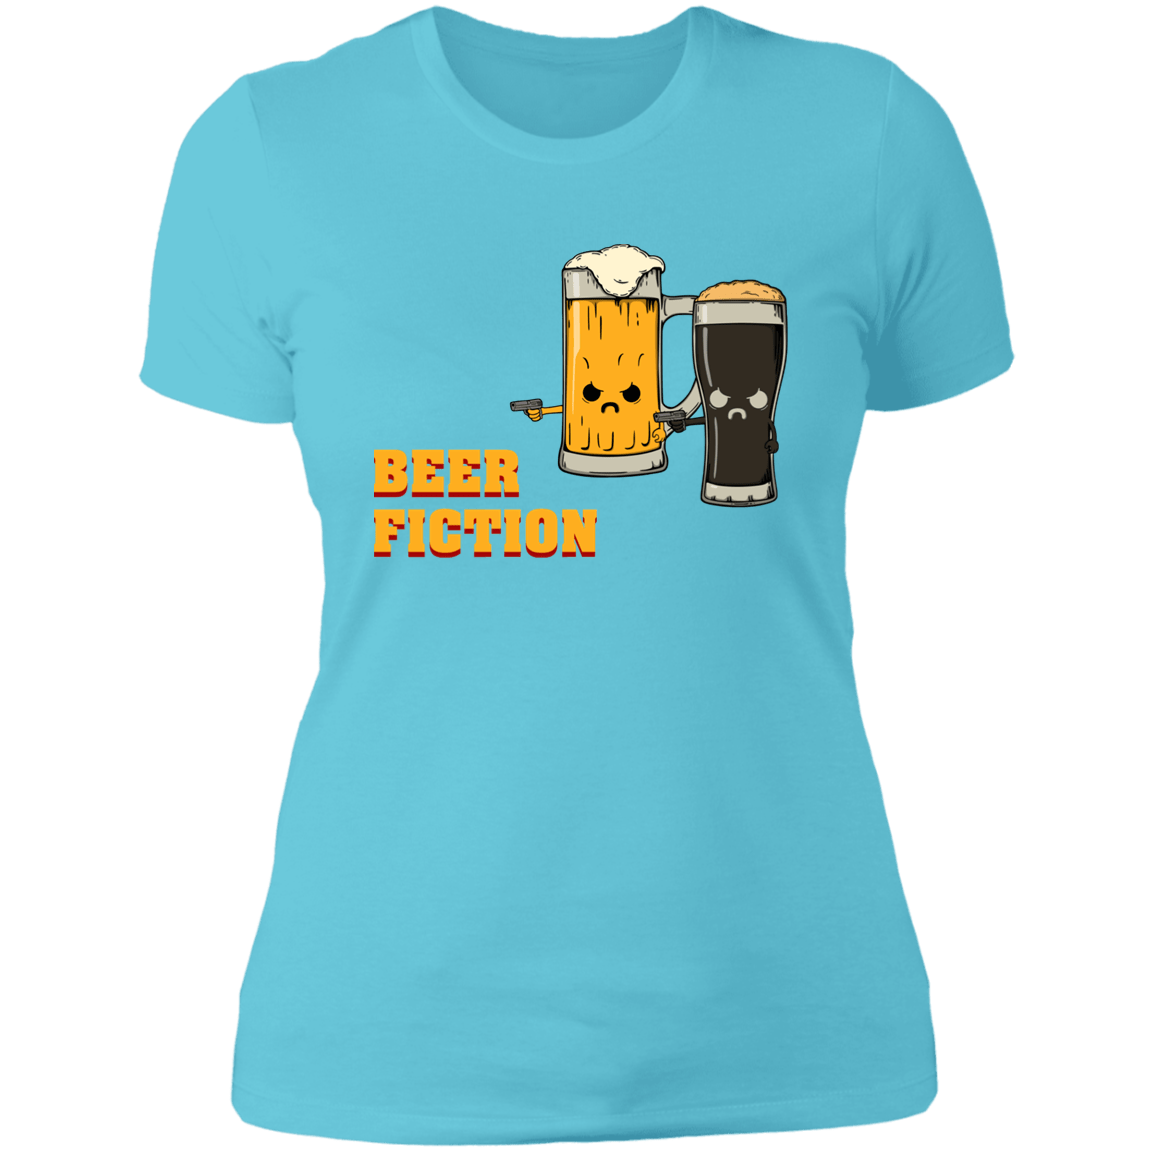 T-Shirts Cancun / S Beer Fiction Women's Premium T-Shirt